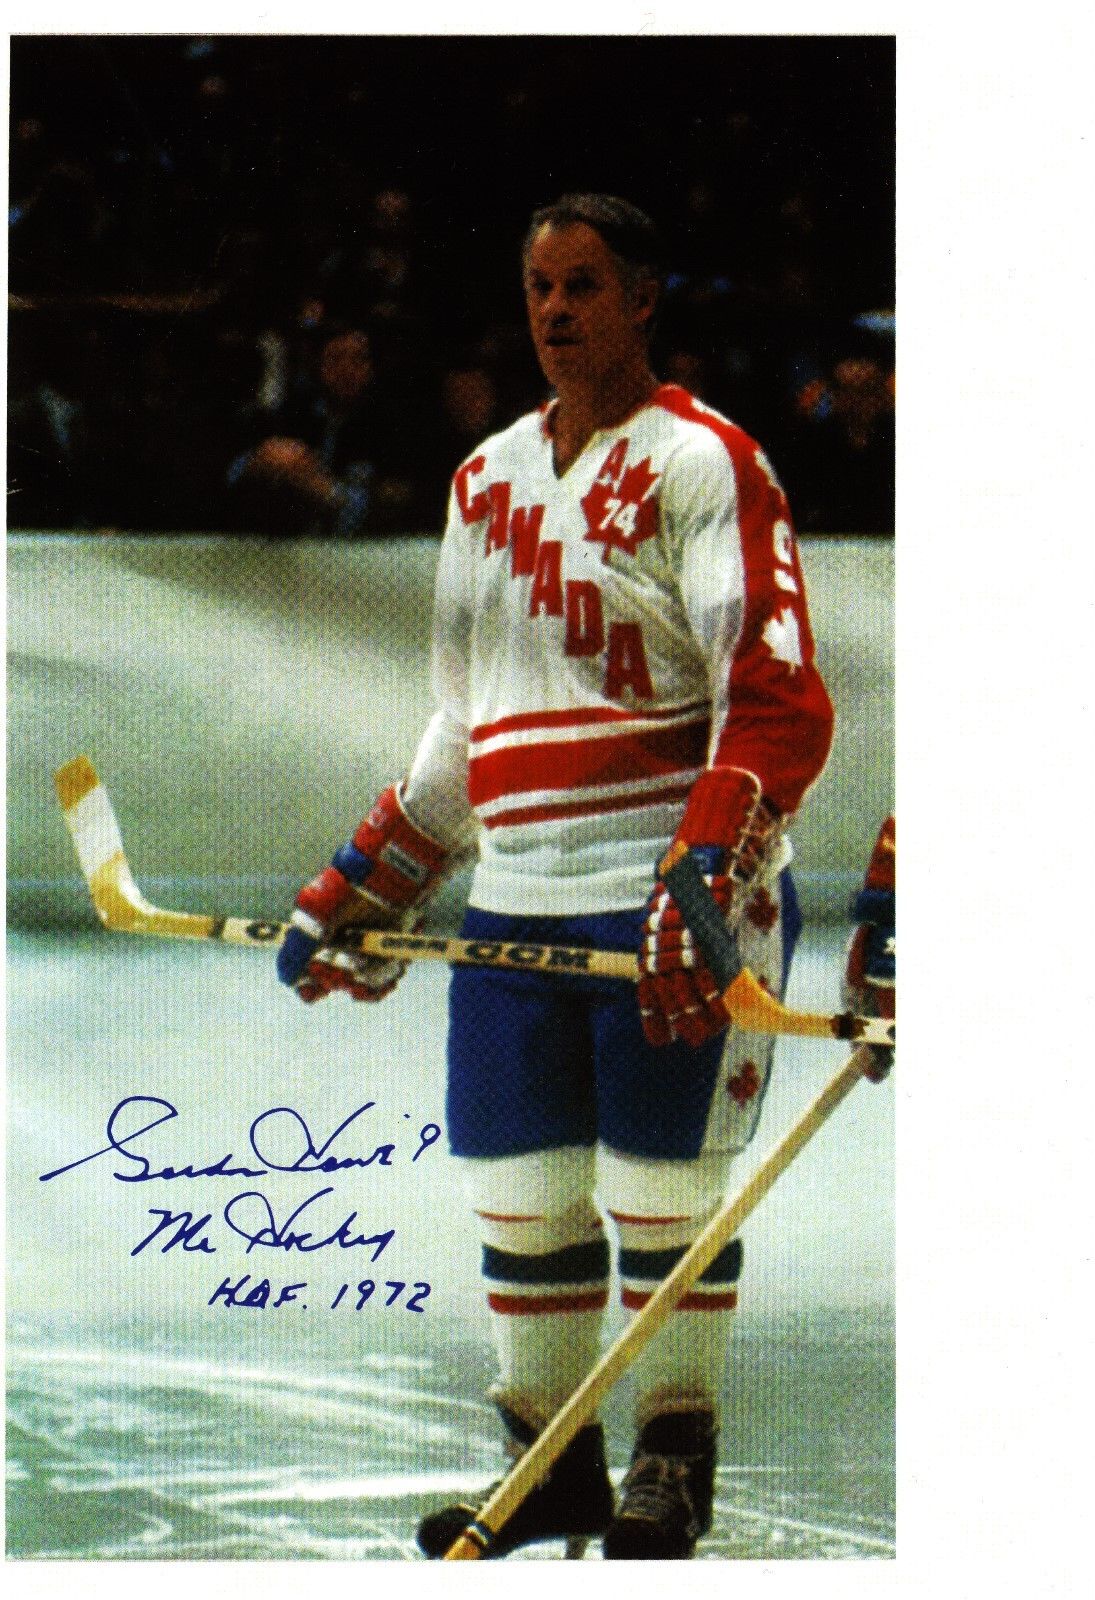 Gordie Howe pose on 1974 Team Canada vs Team Russia in exhibition Series